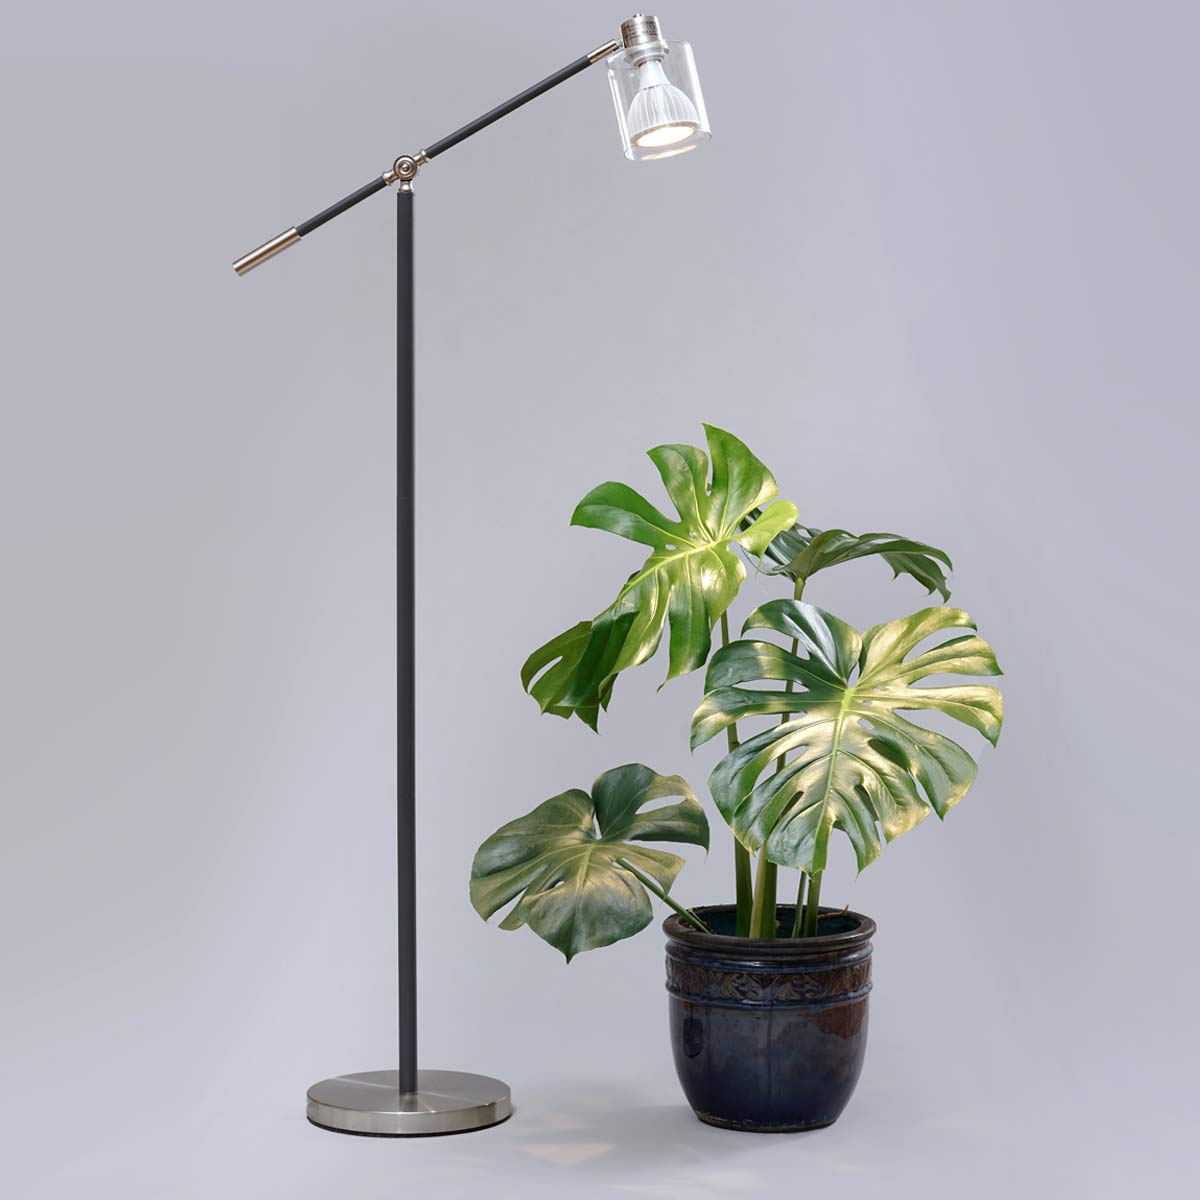 Soltech Solutions Vita LED Grow Light Bulb Lamp